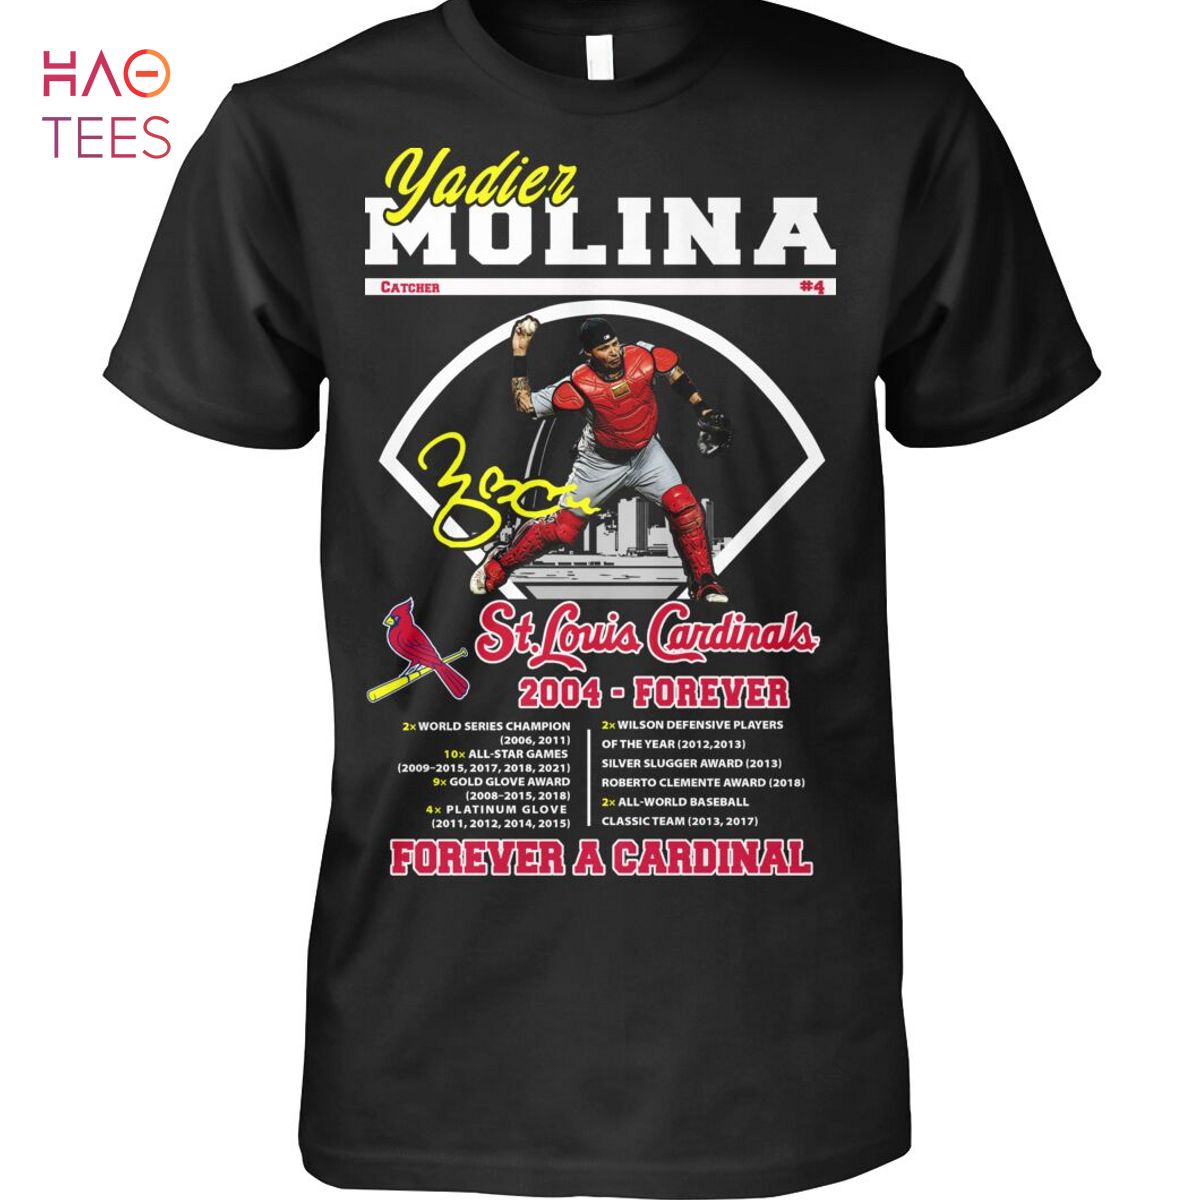 Yaduer Molina St Louis Cardinals 2004 Forever Forever A Cardinal Shirt